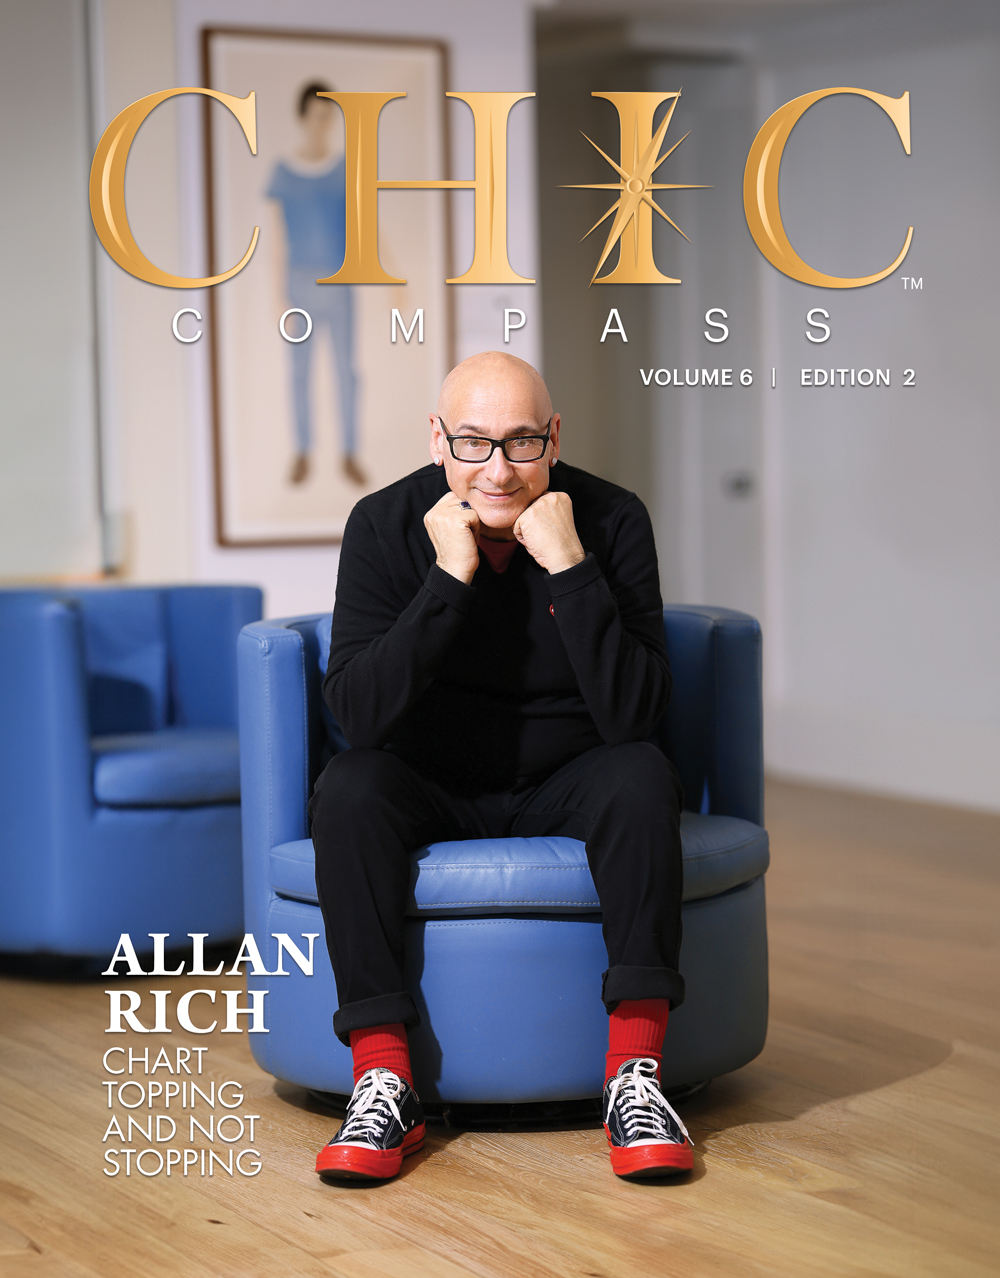 Chic Compass Magazine - Issue 18